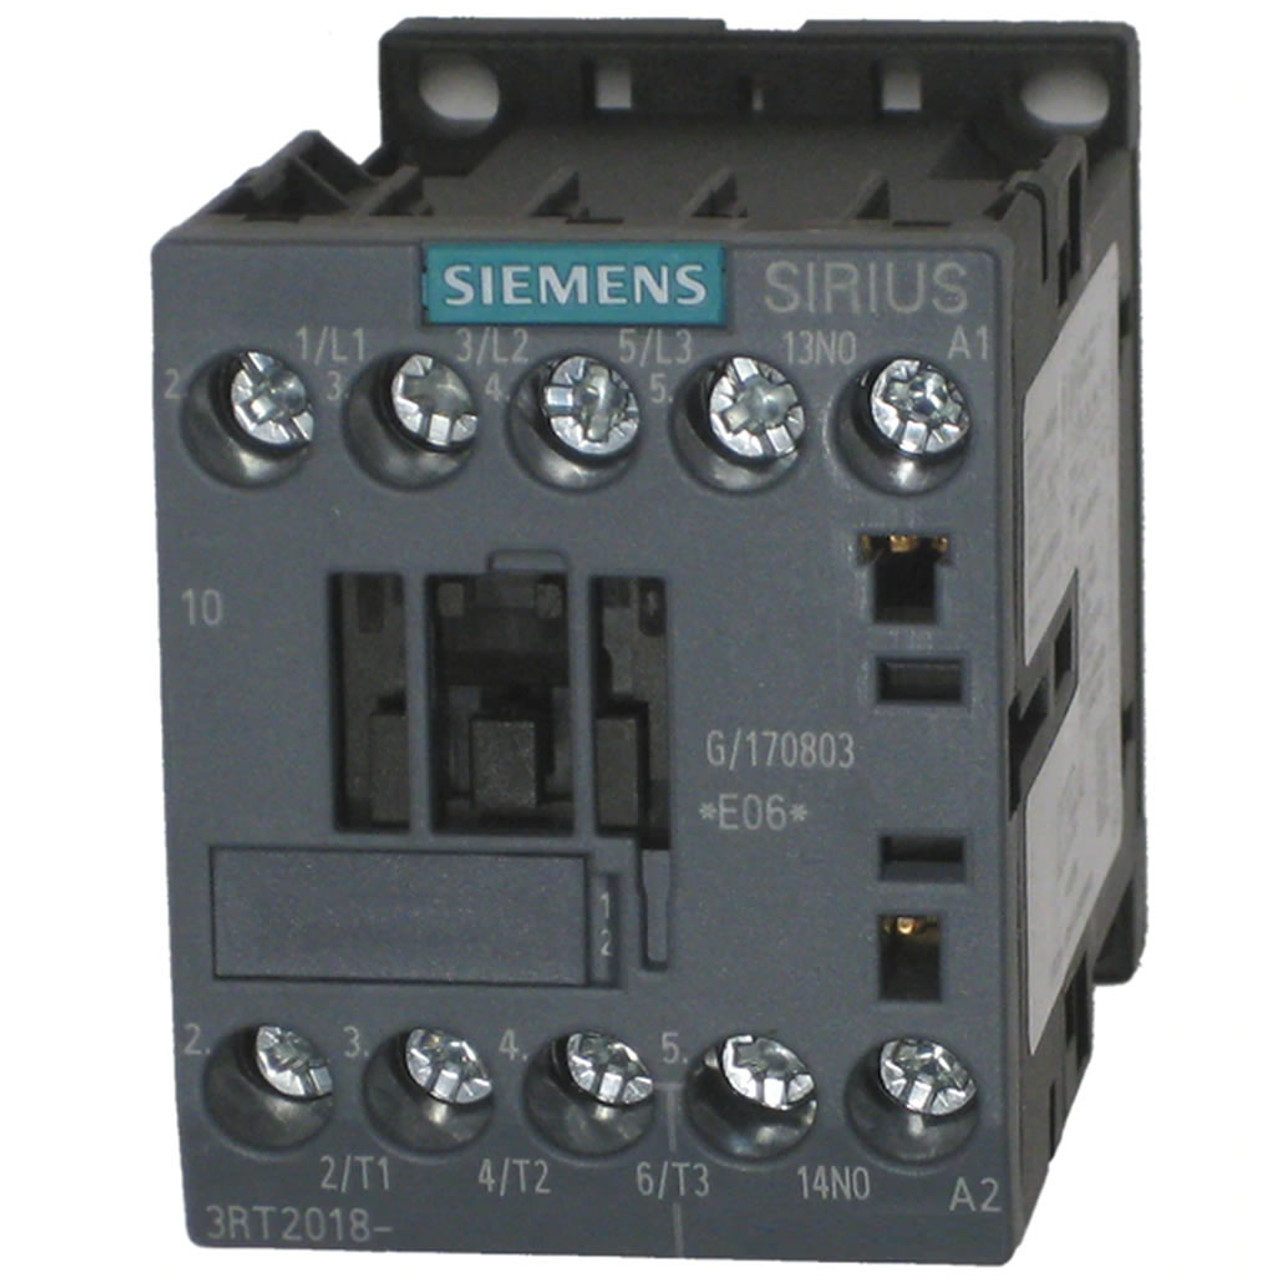 Siemens 3RT2018-1AV61 electrical contactor